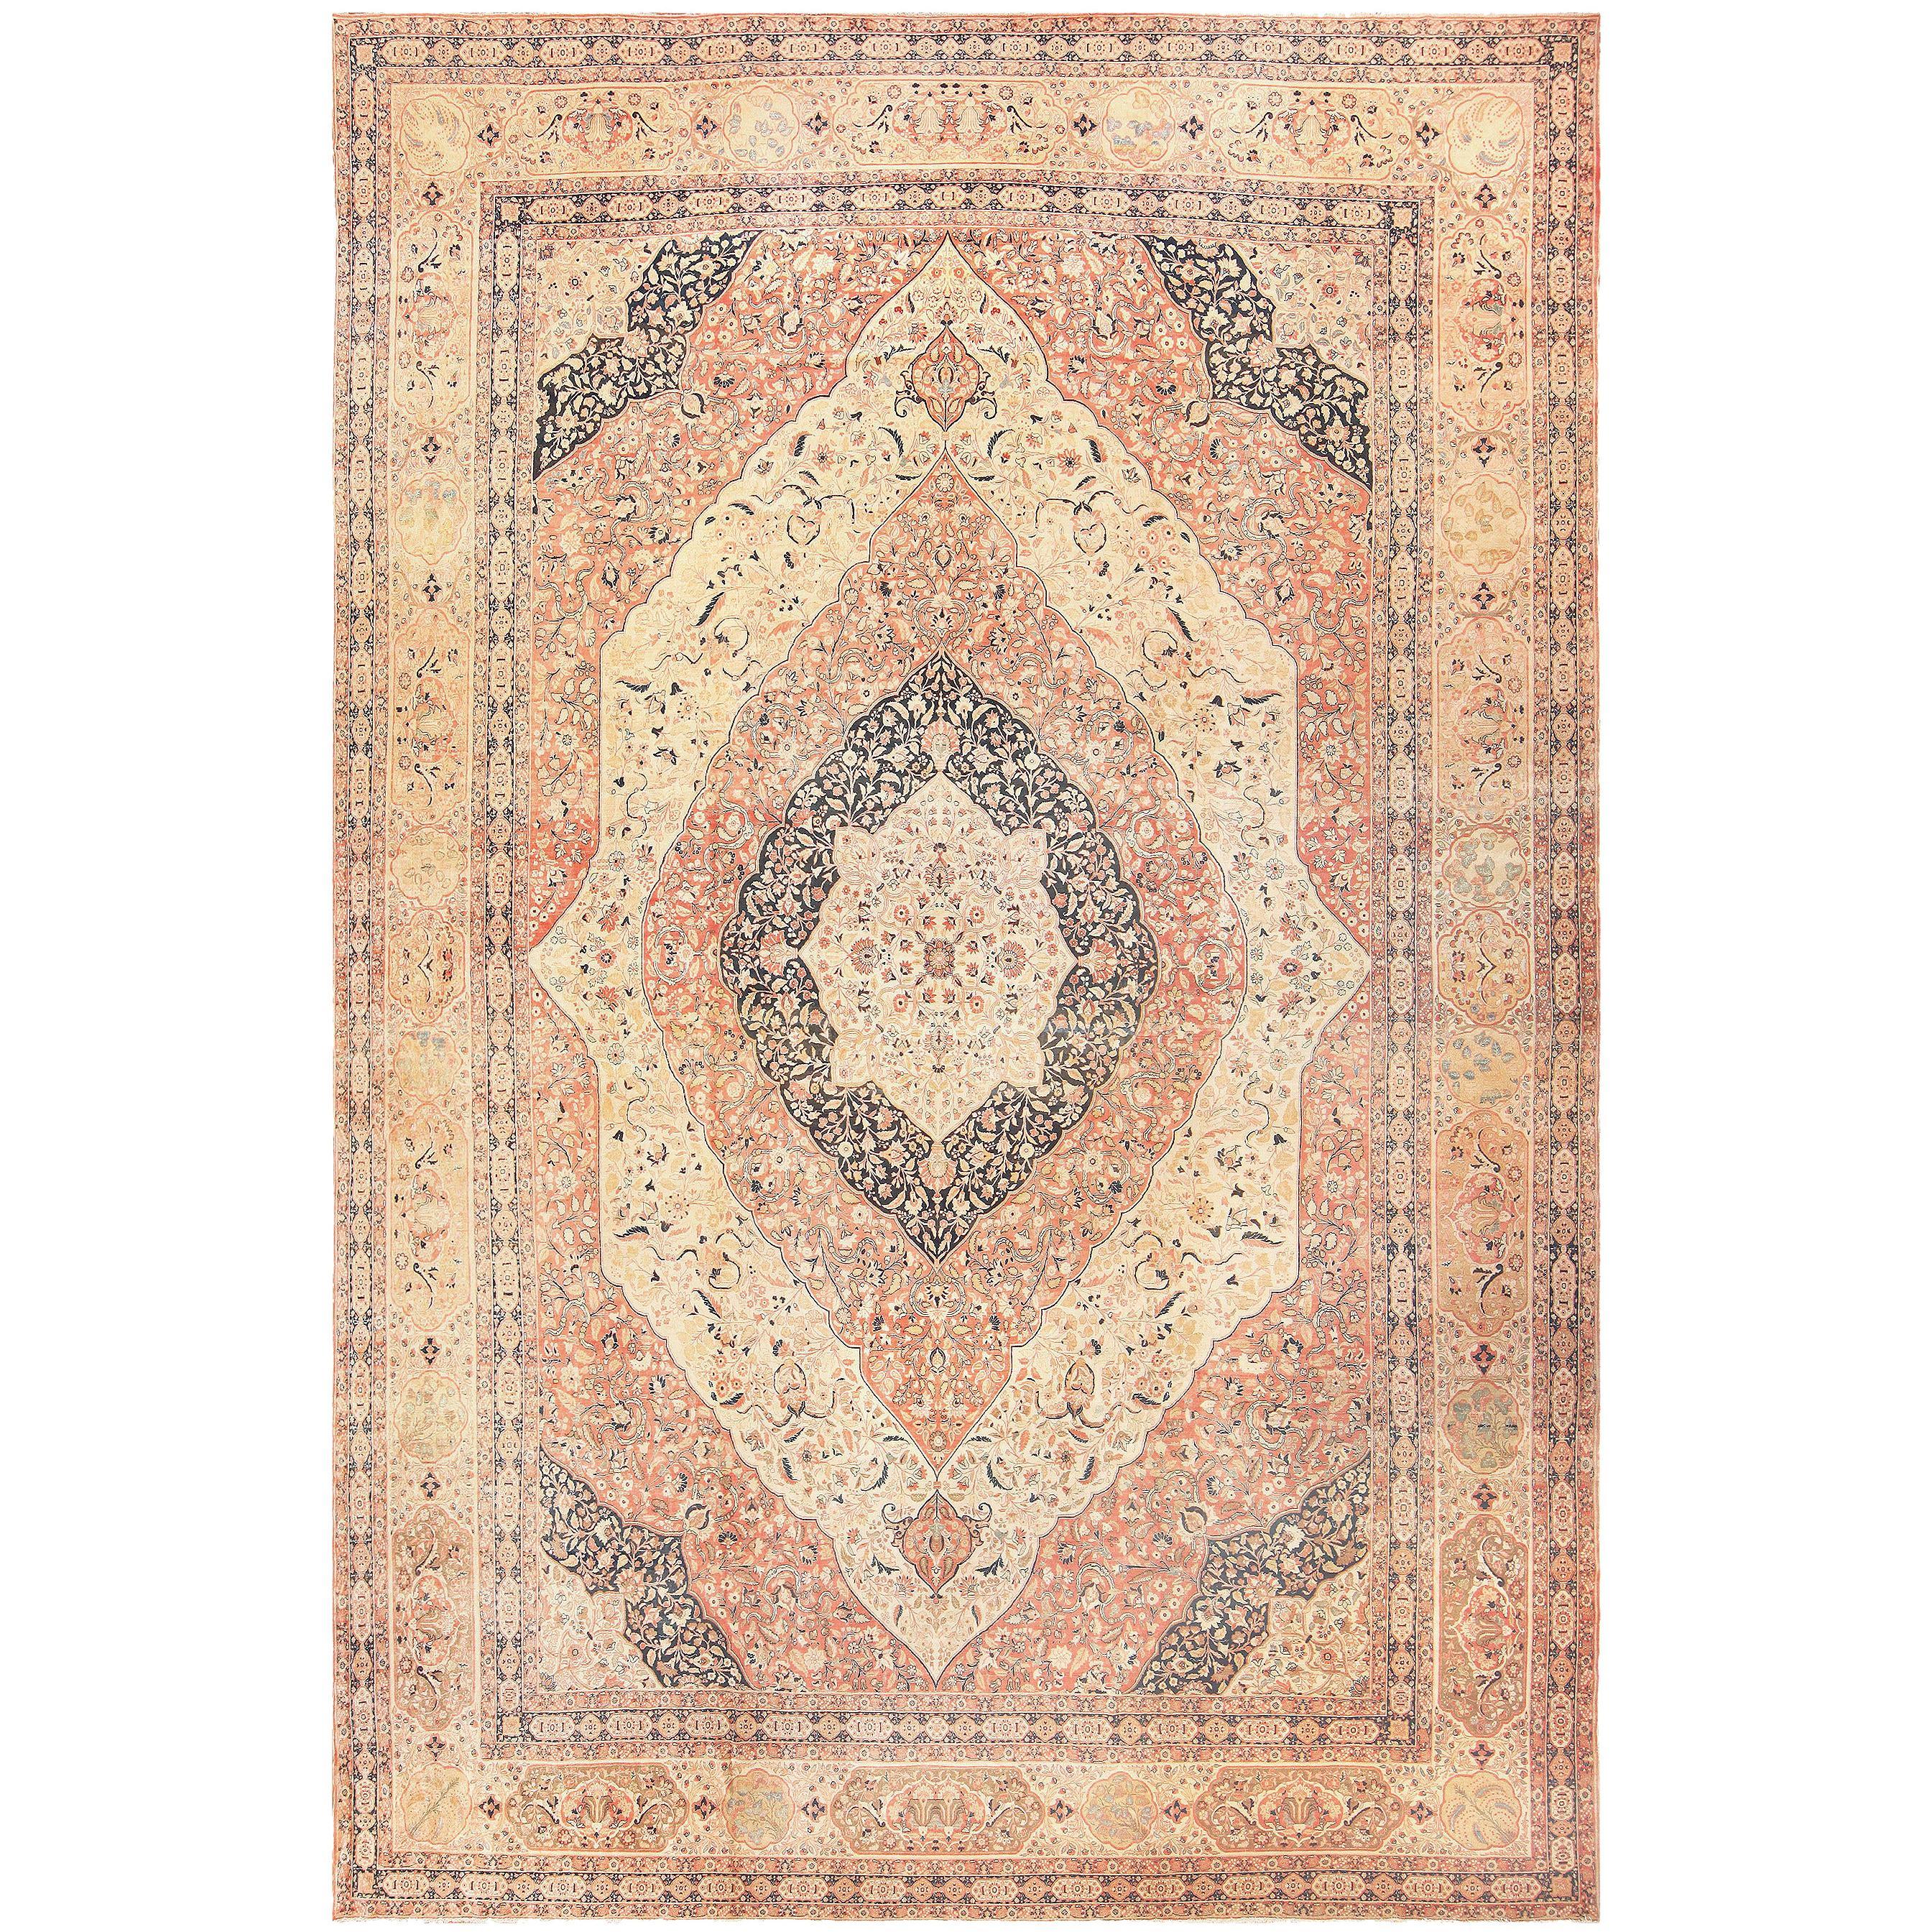 Nazmiyal Antique Tabriz Persian Carpet by Haji Jalili. 16 ft x 25 ft 4 in